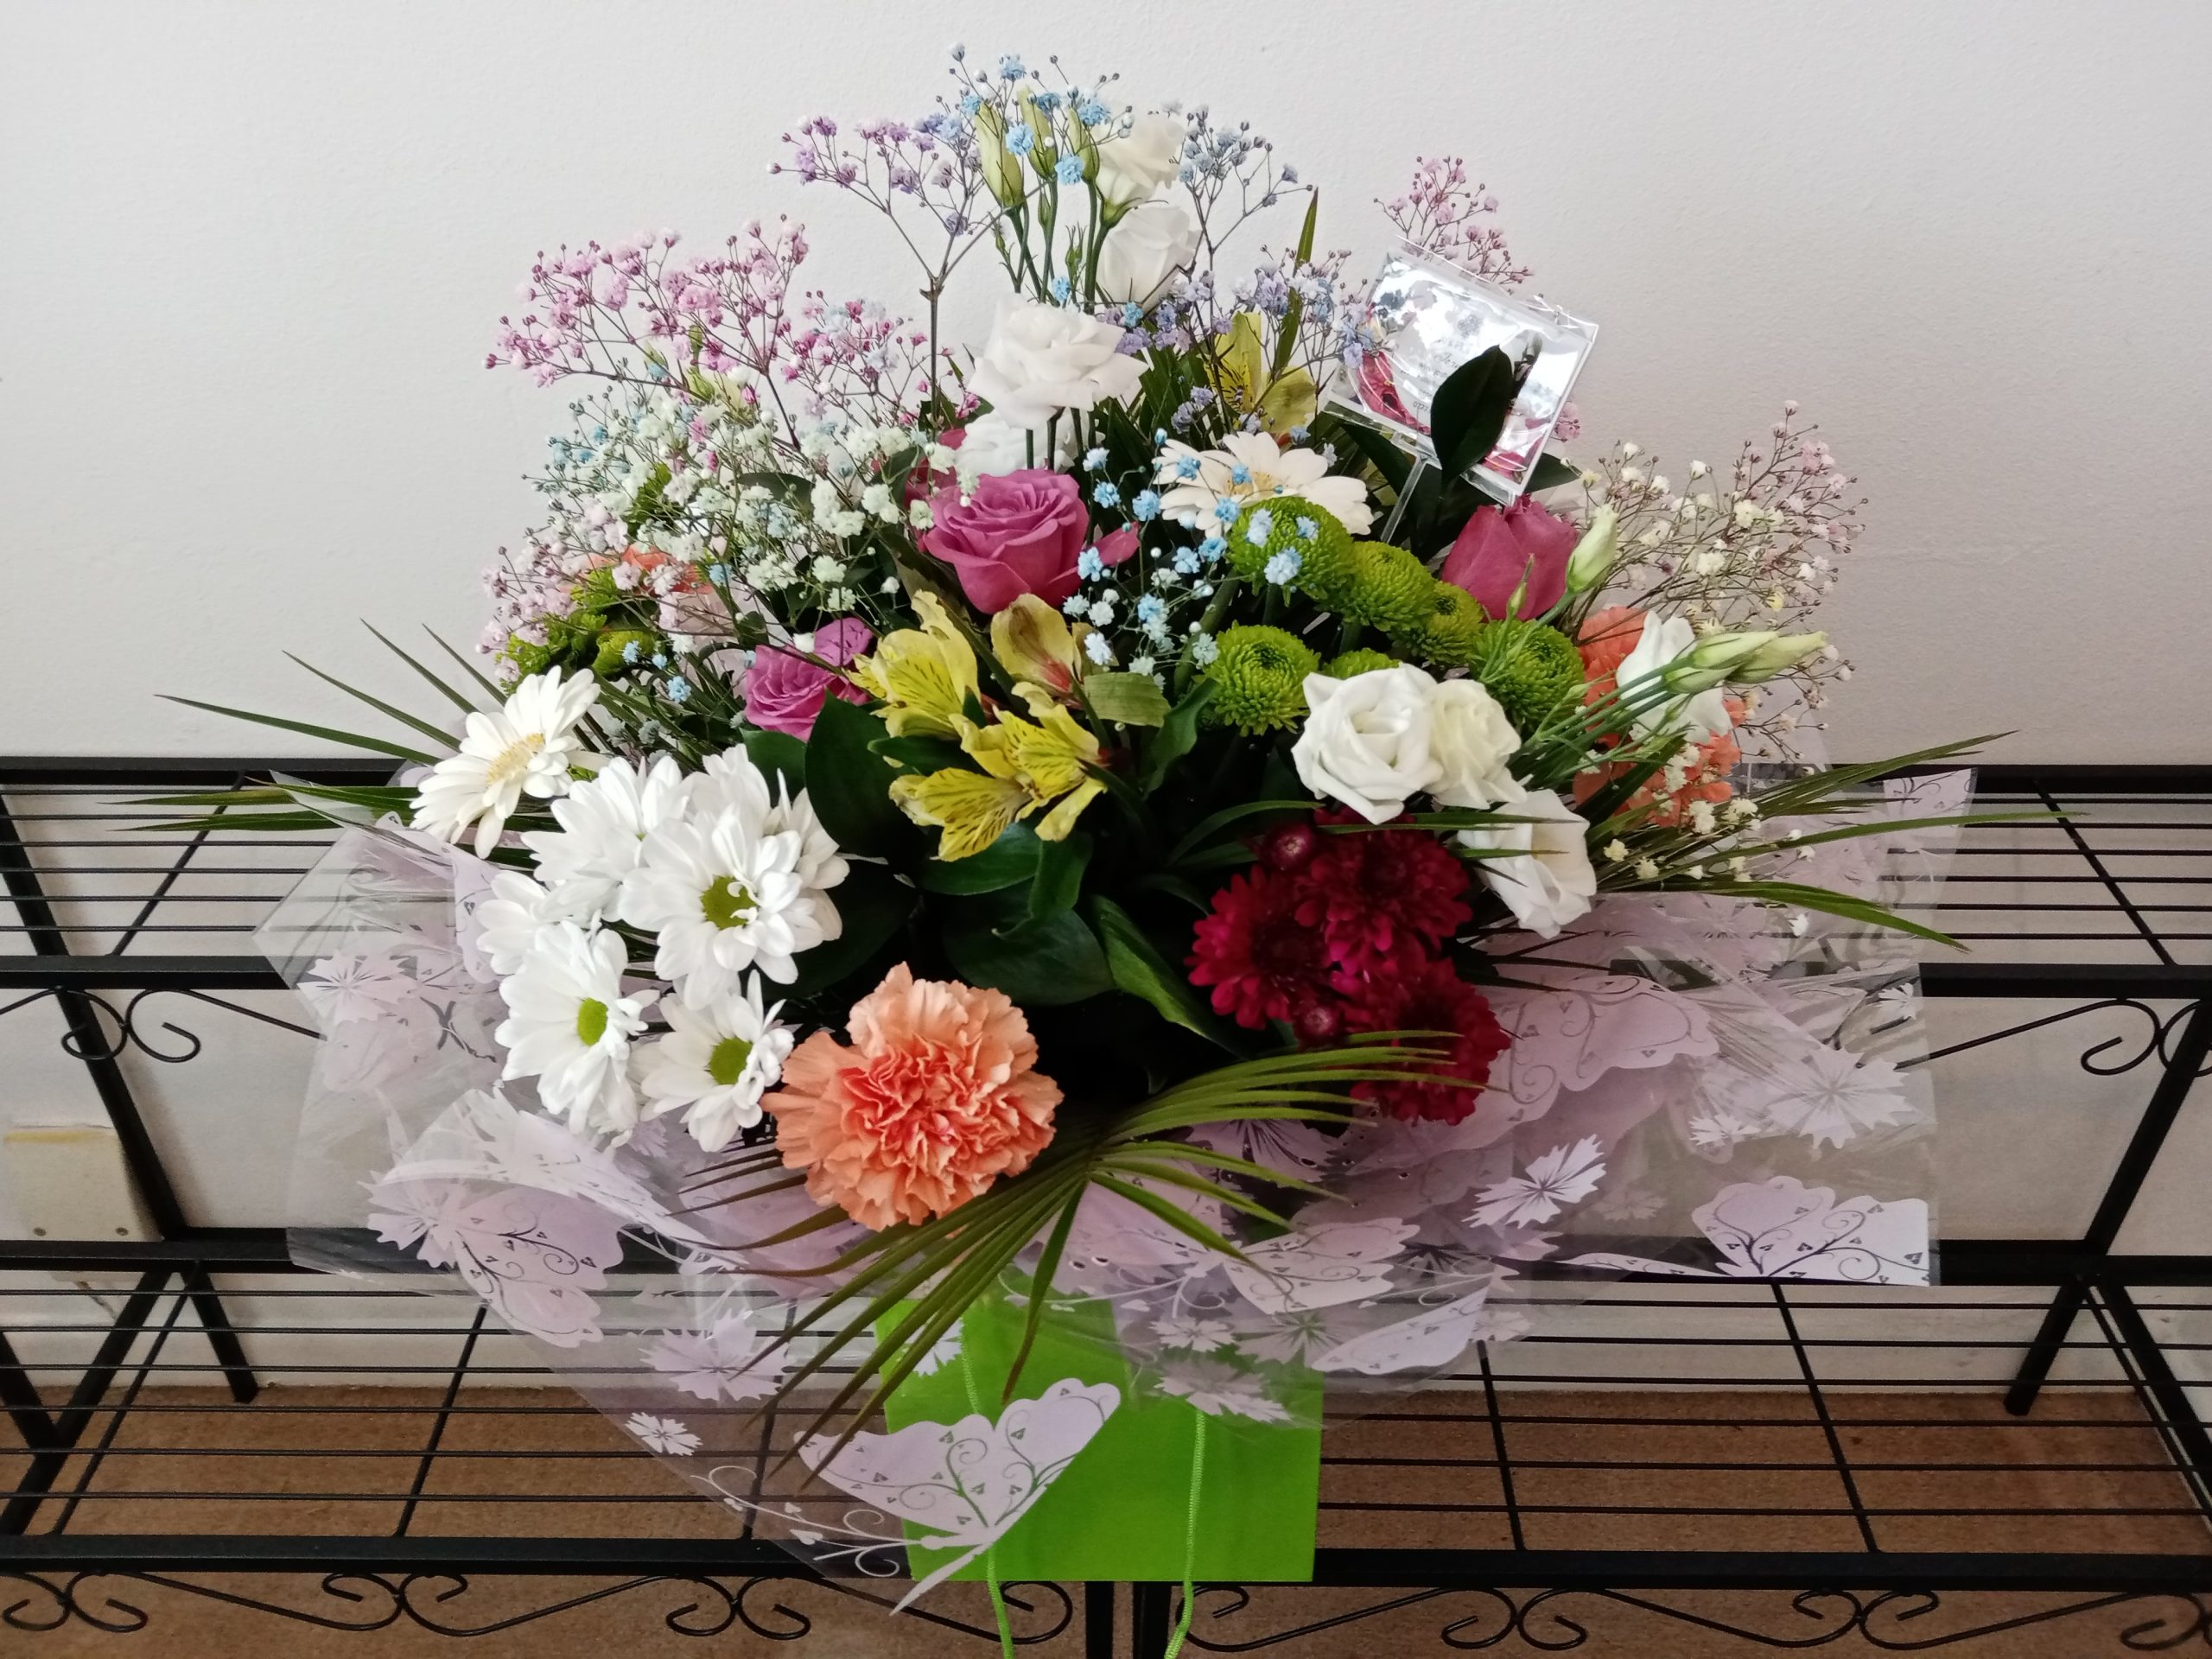 jo's florist telford flower arrangement 11